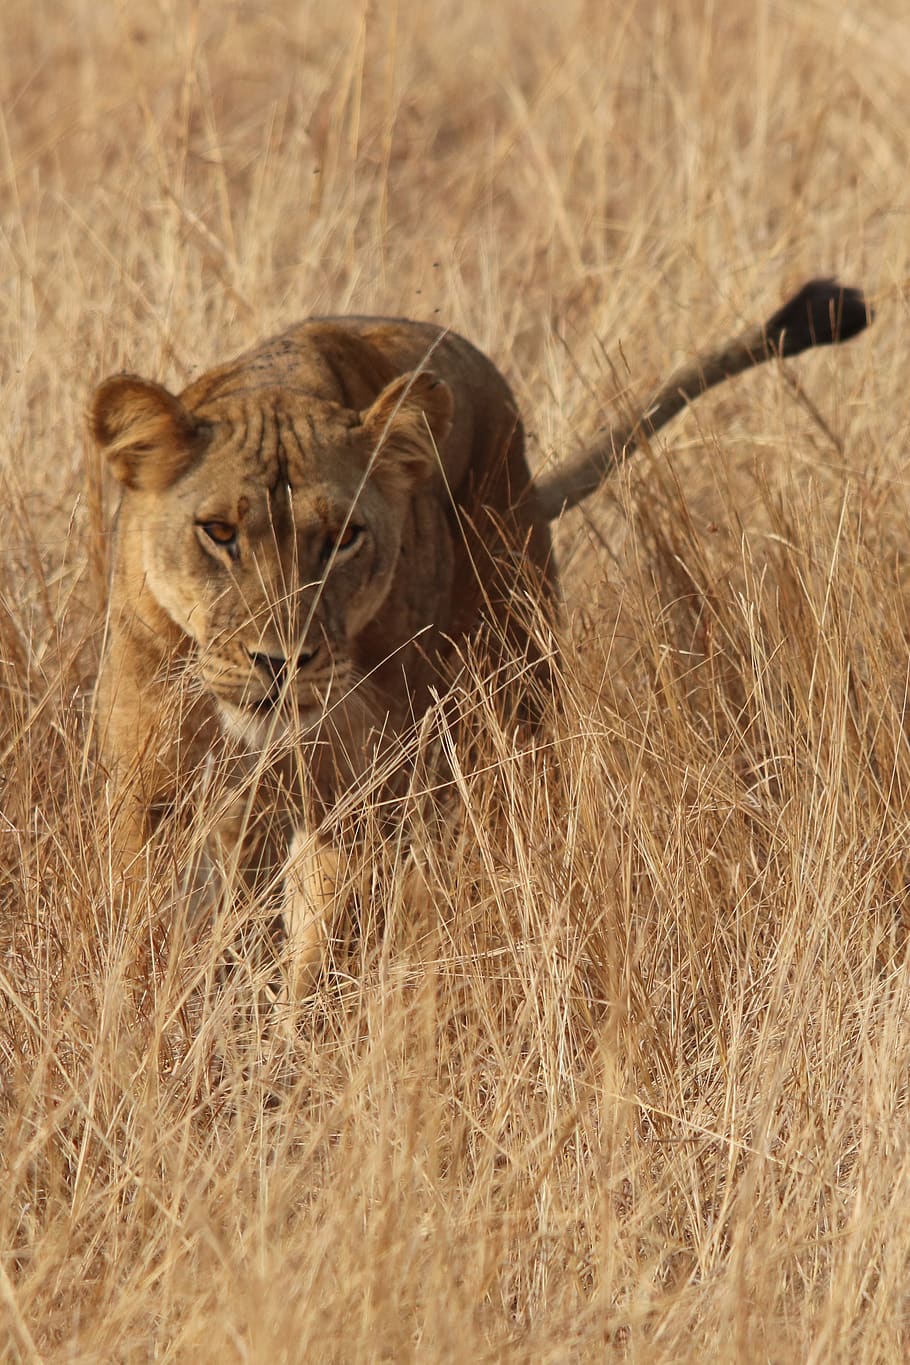 the lioness, predator, savannah, animal wildlife, one animal, feline, mammal, animals in the wild, cat, lion - feline